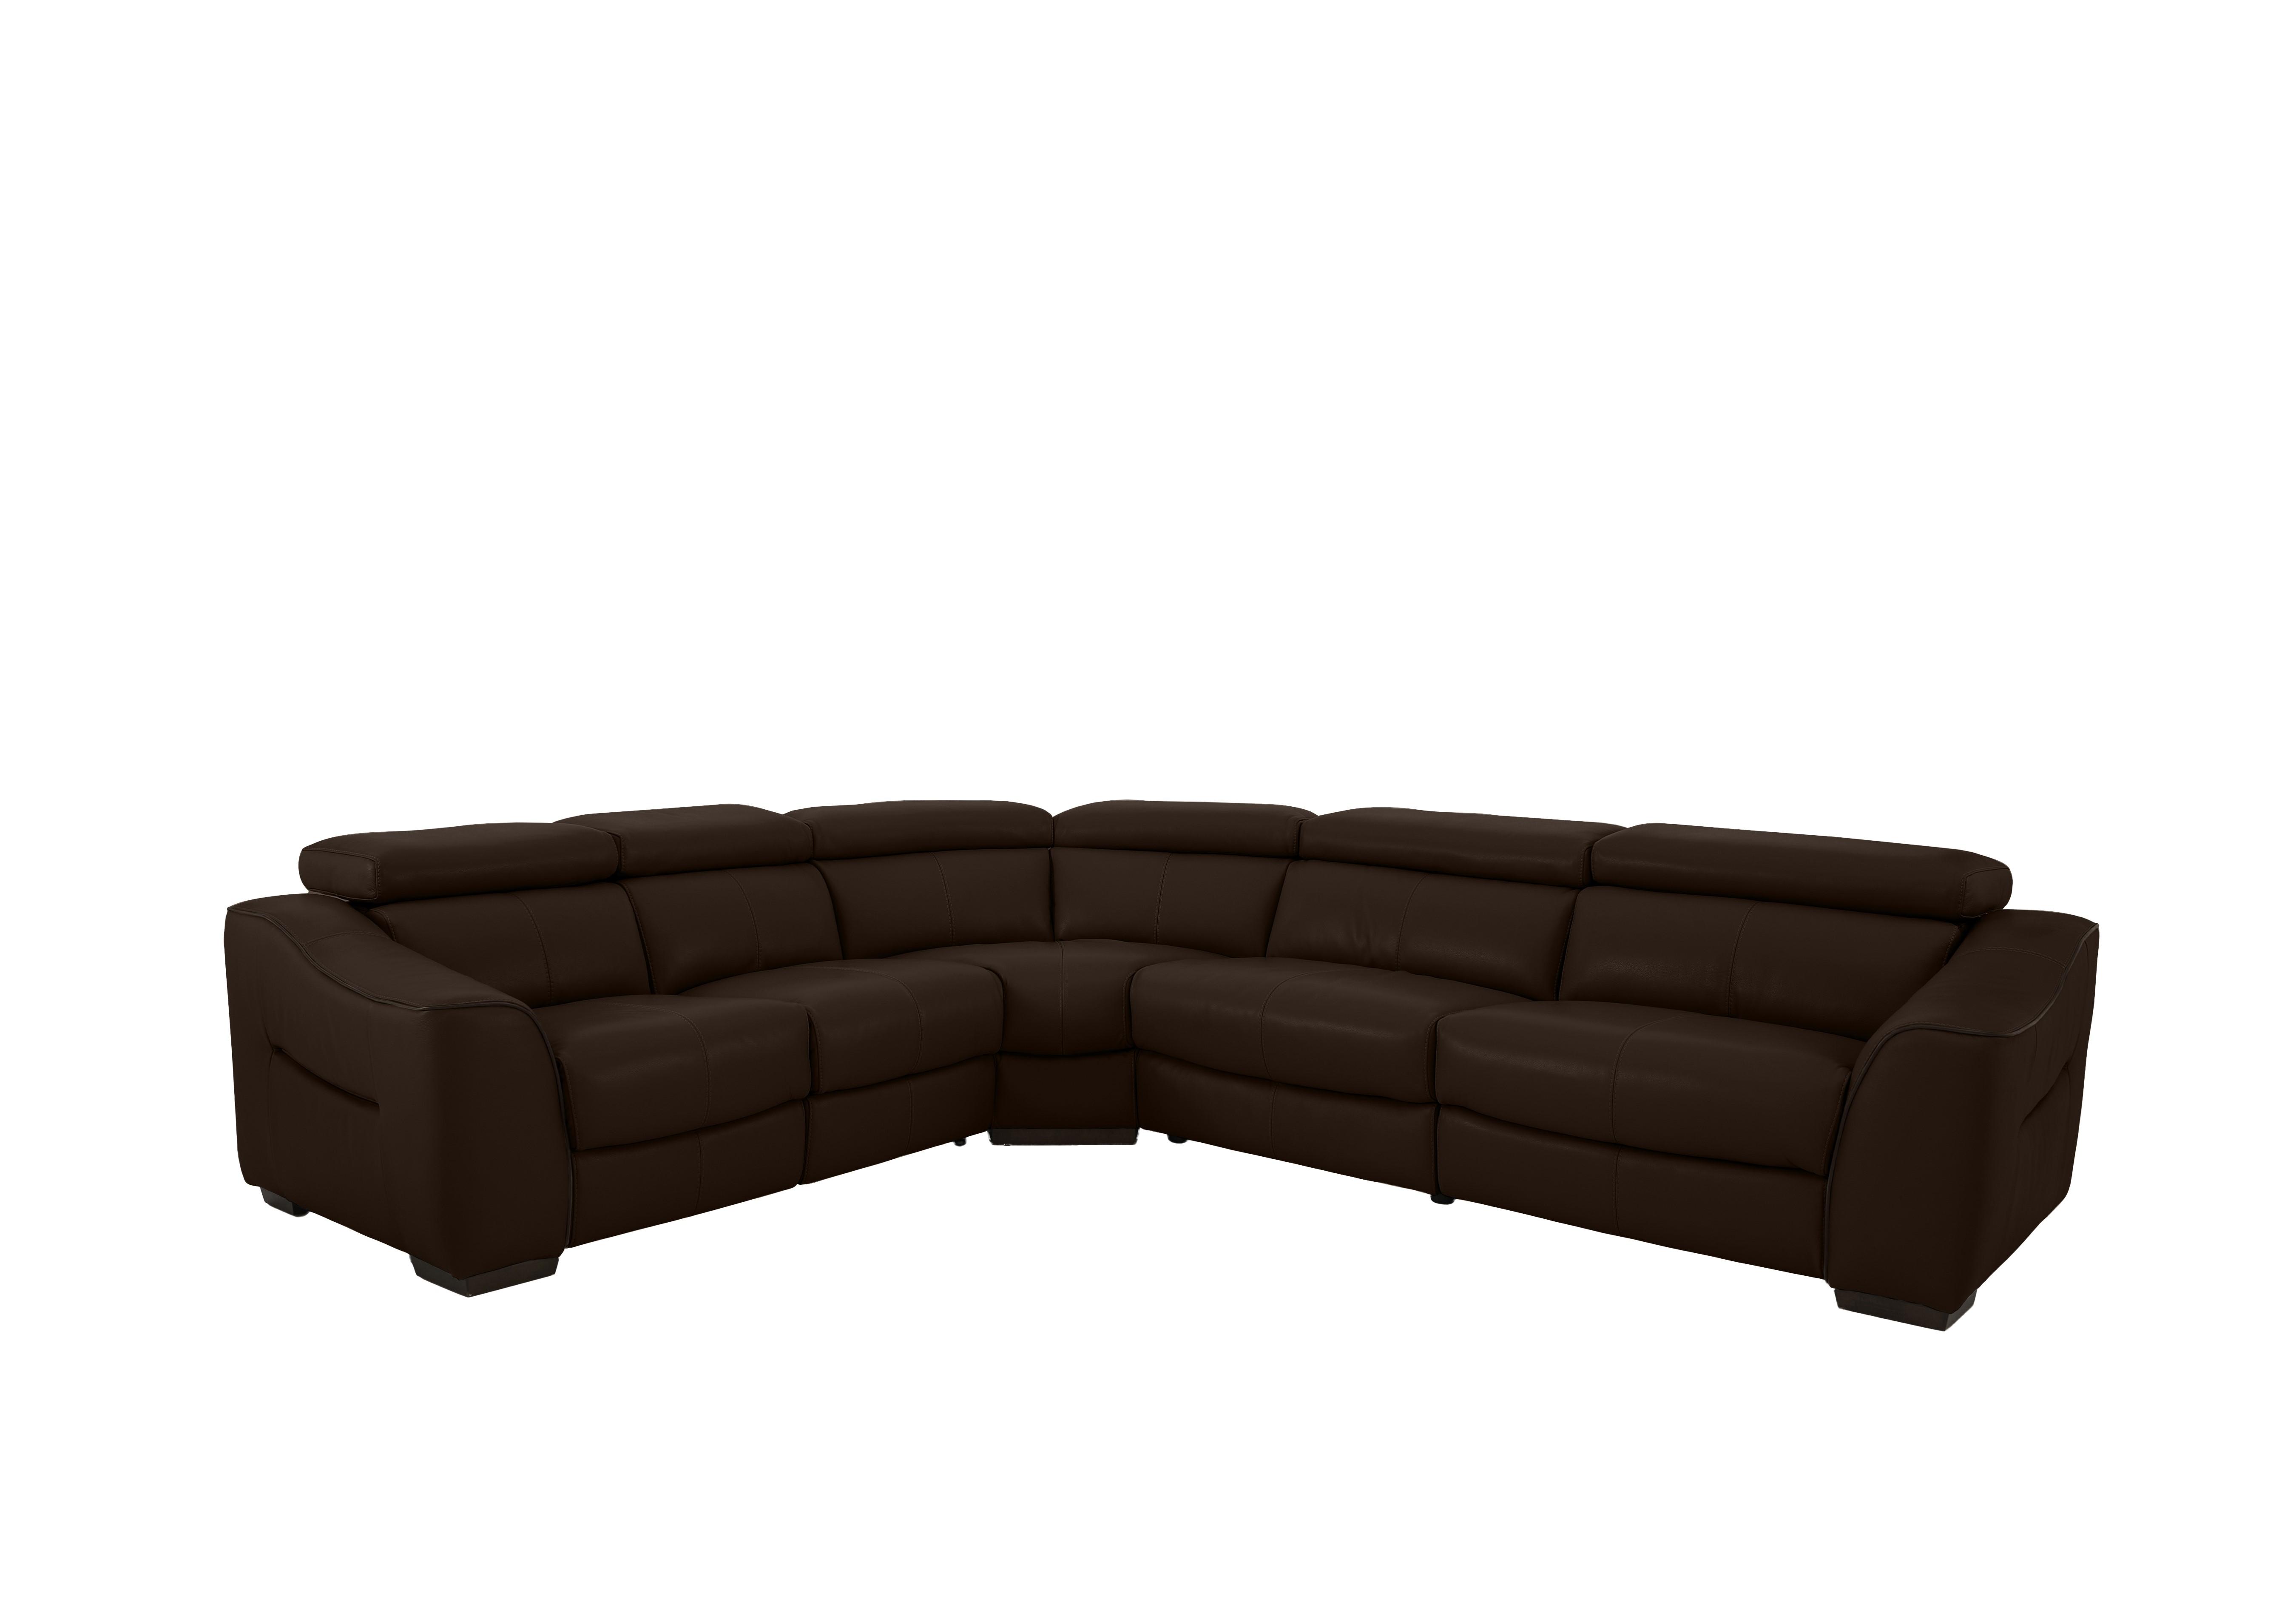 Elixir Leather Power Recliner Corner Sofa in Bv-1748 Dark Chocolate on Furniture Village